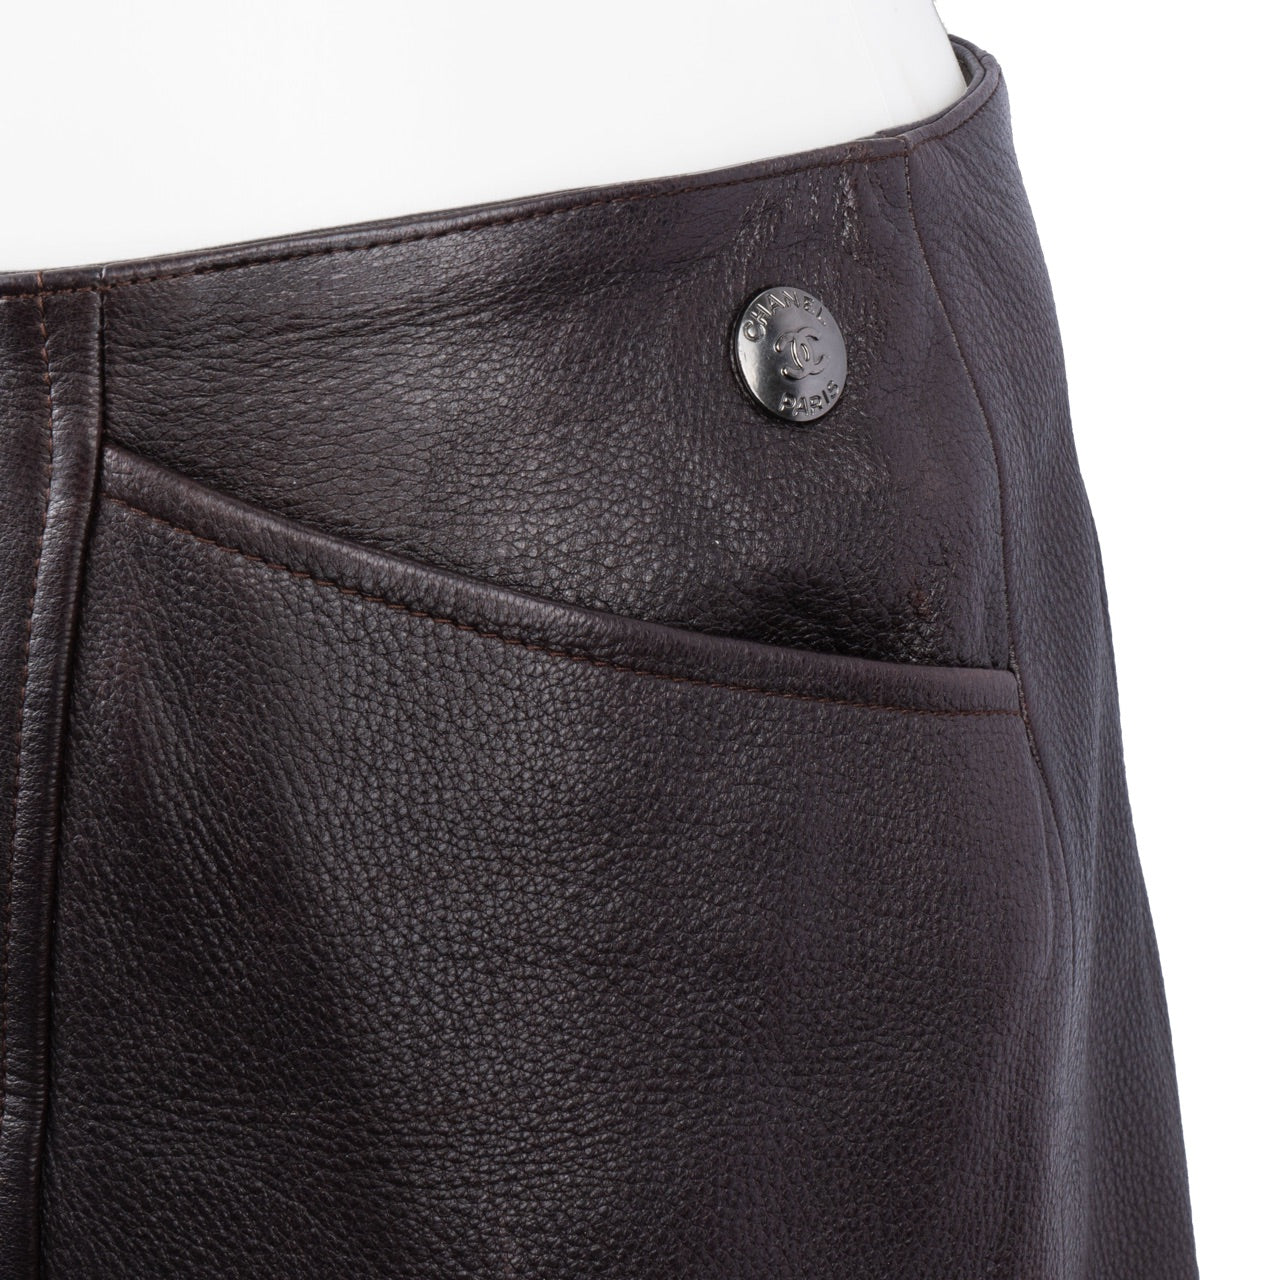 Chanel Deerskin Leather Skirt